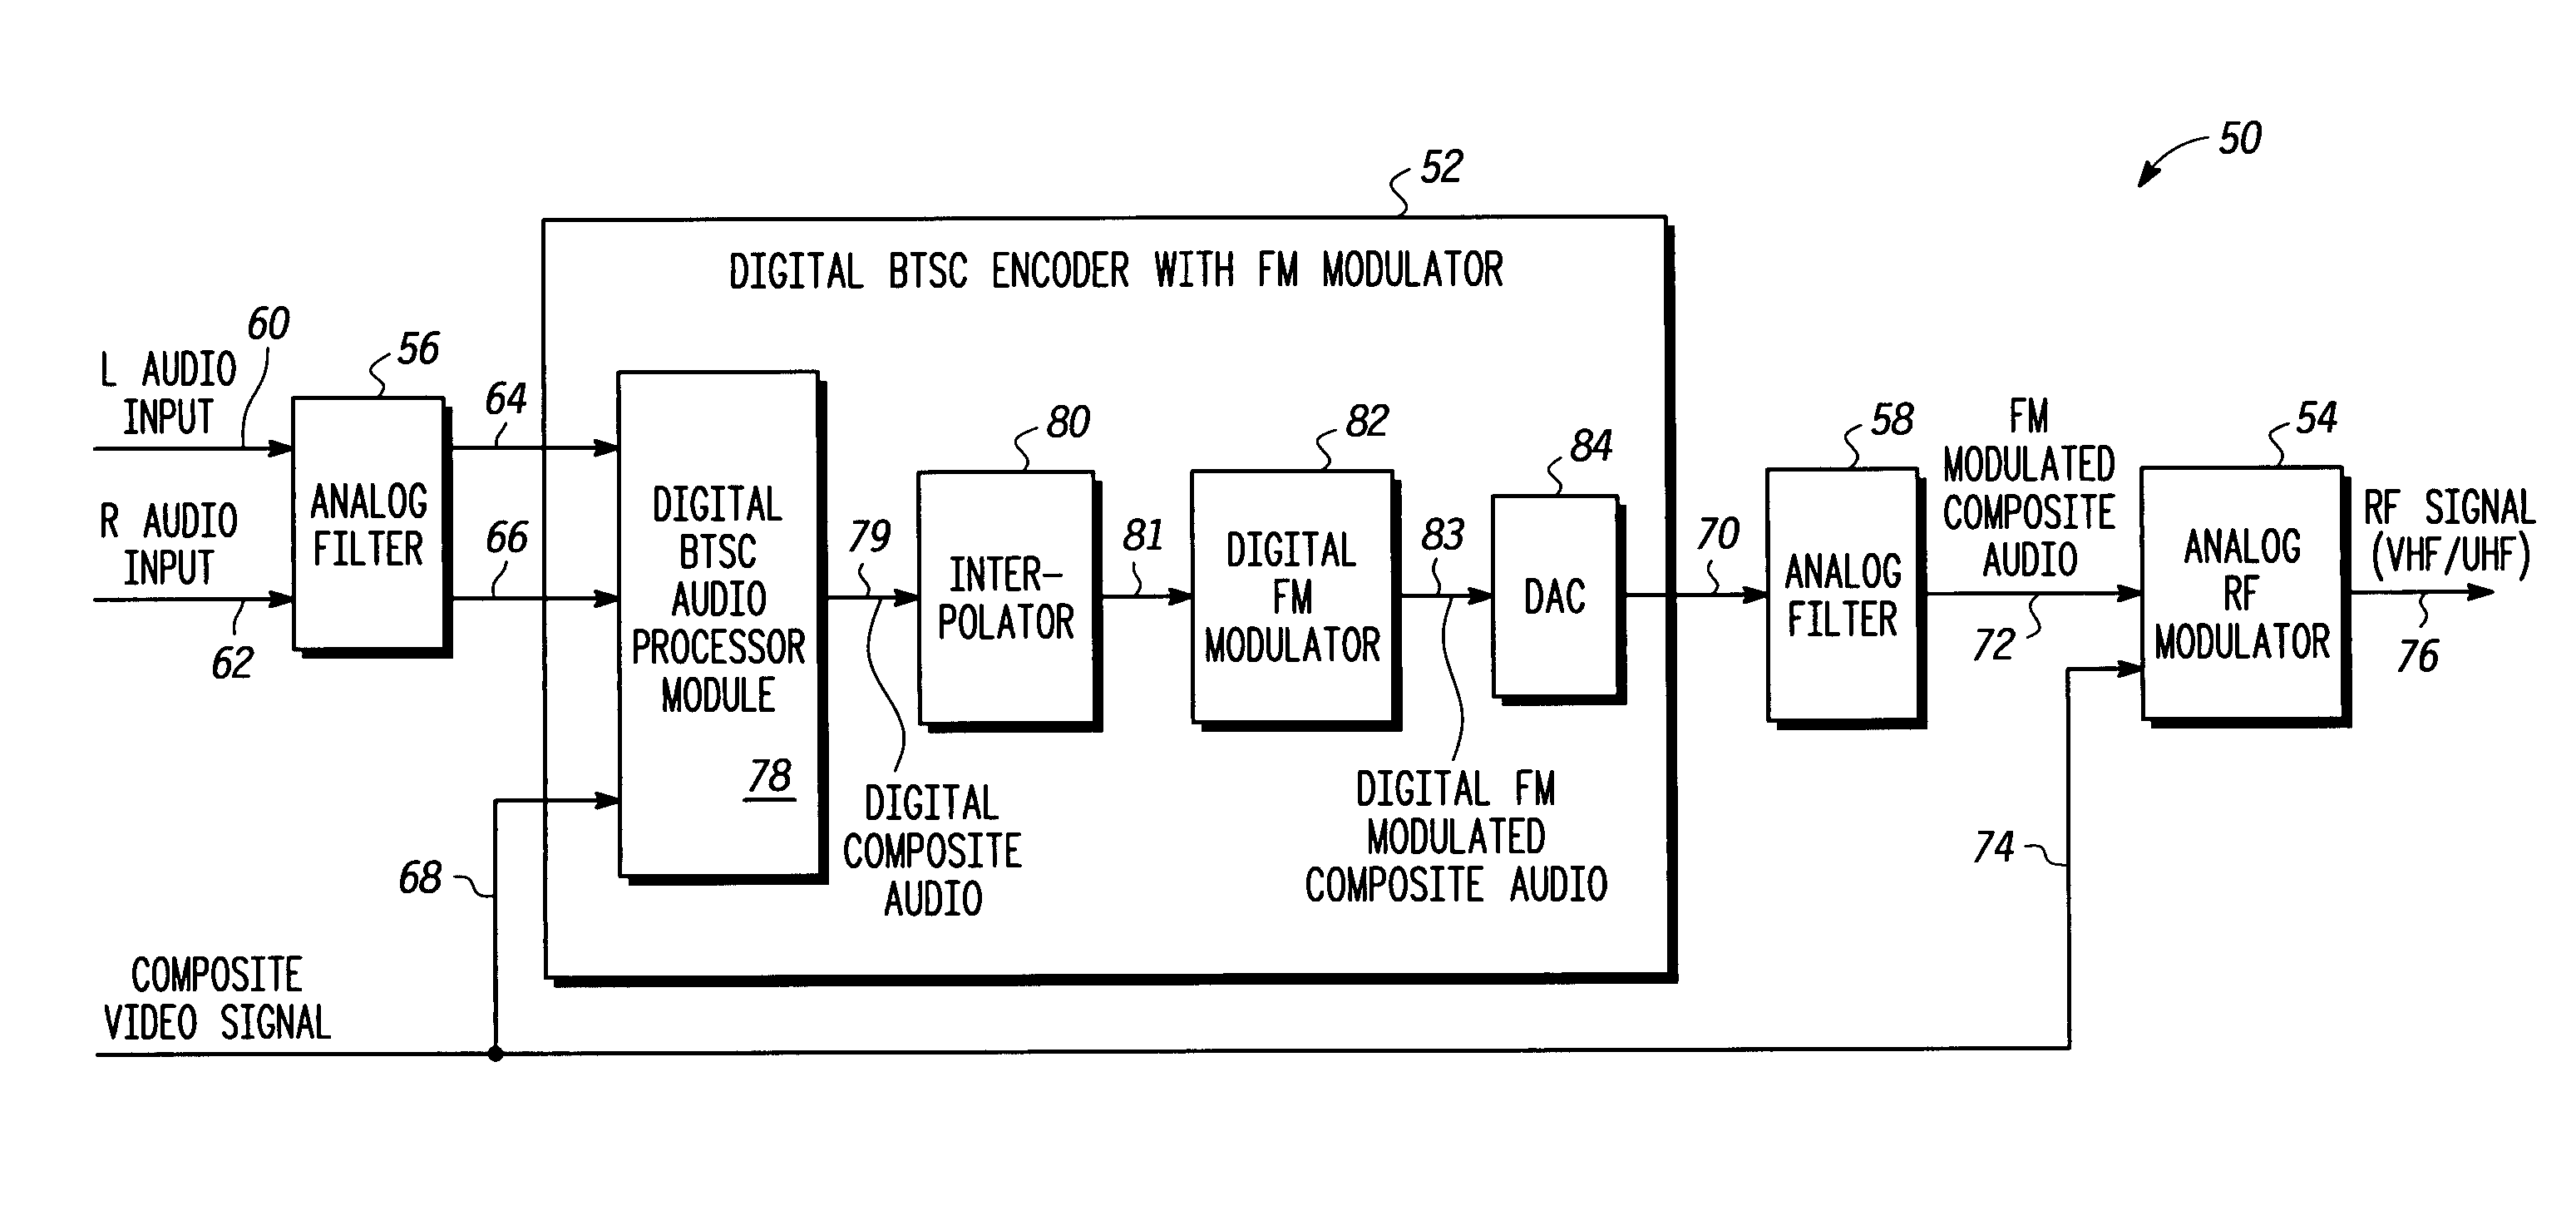 BTSC encoder with digital FM modulator feature